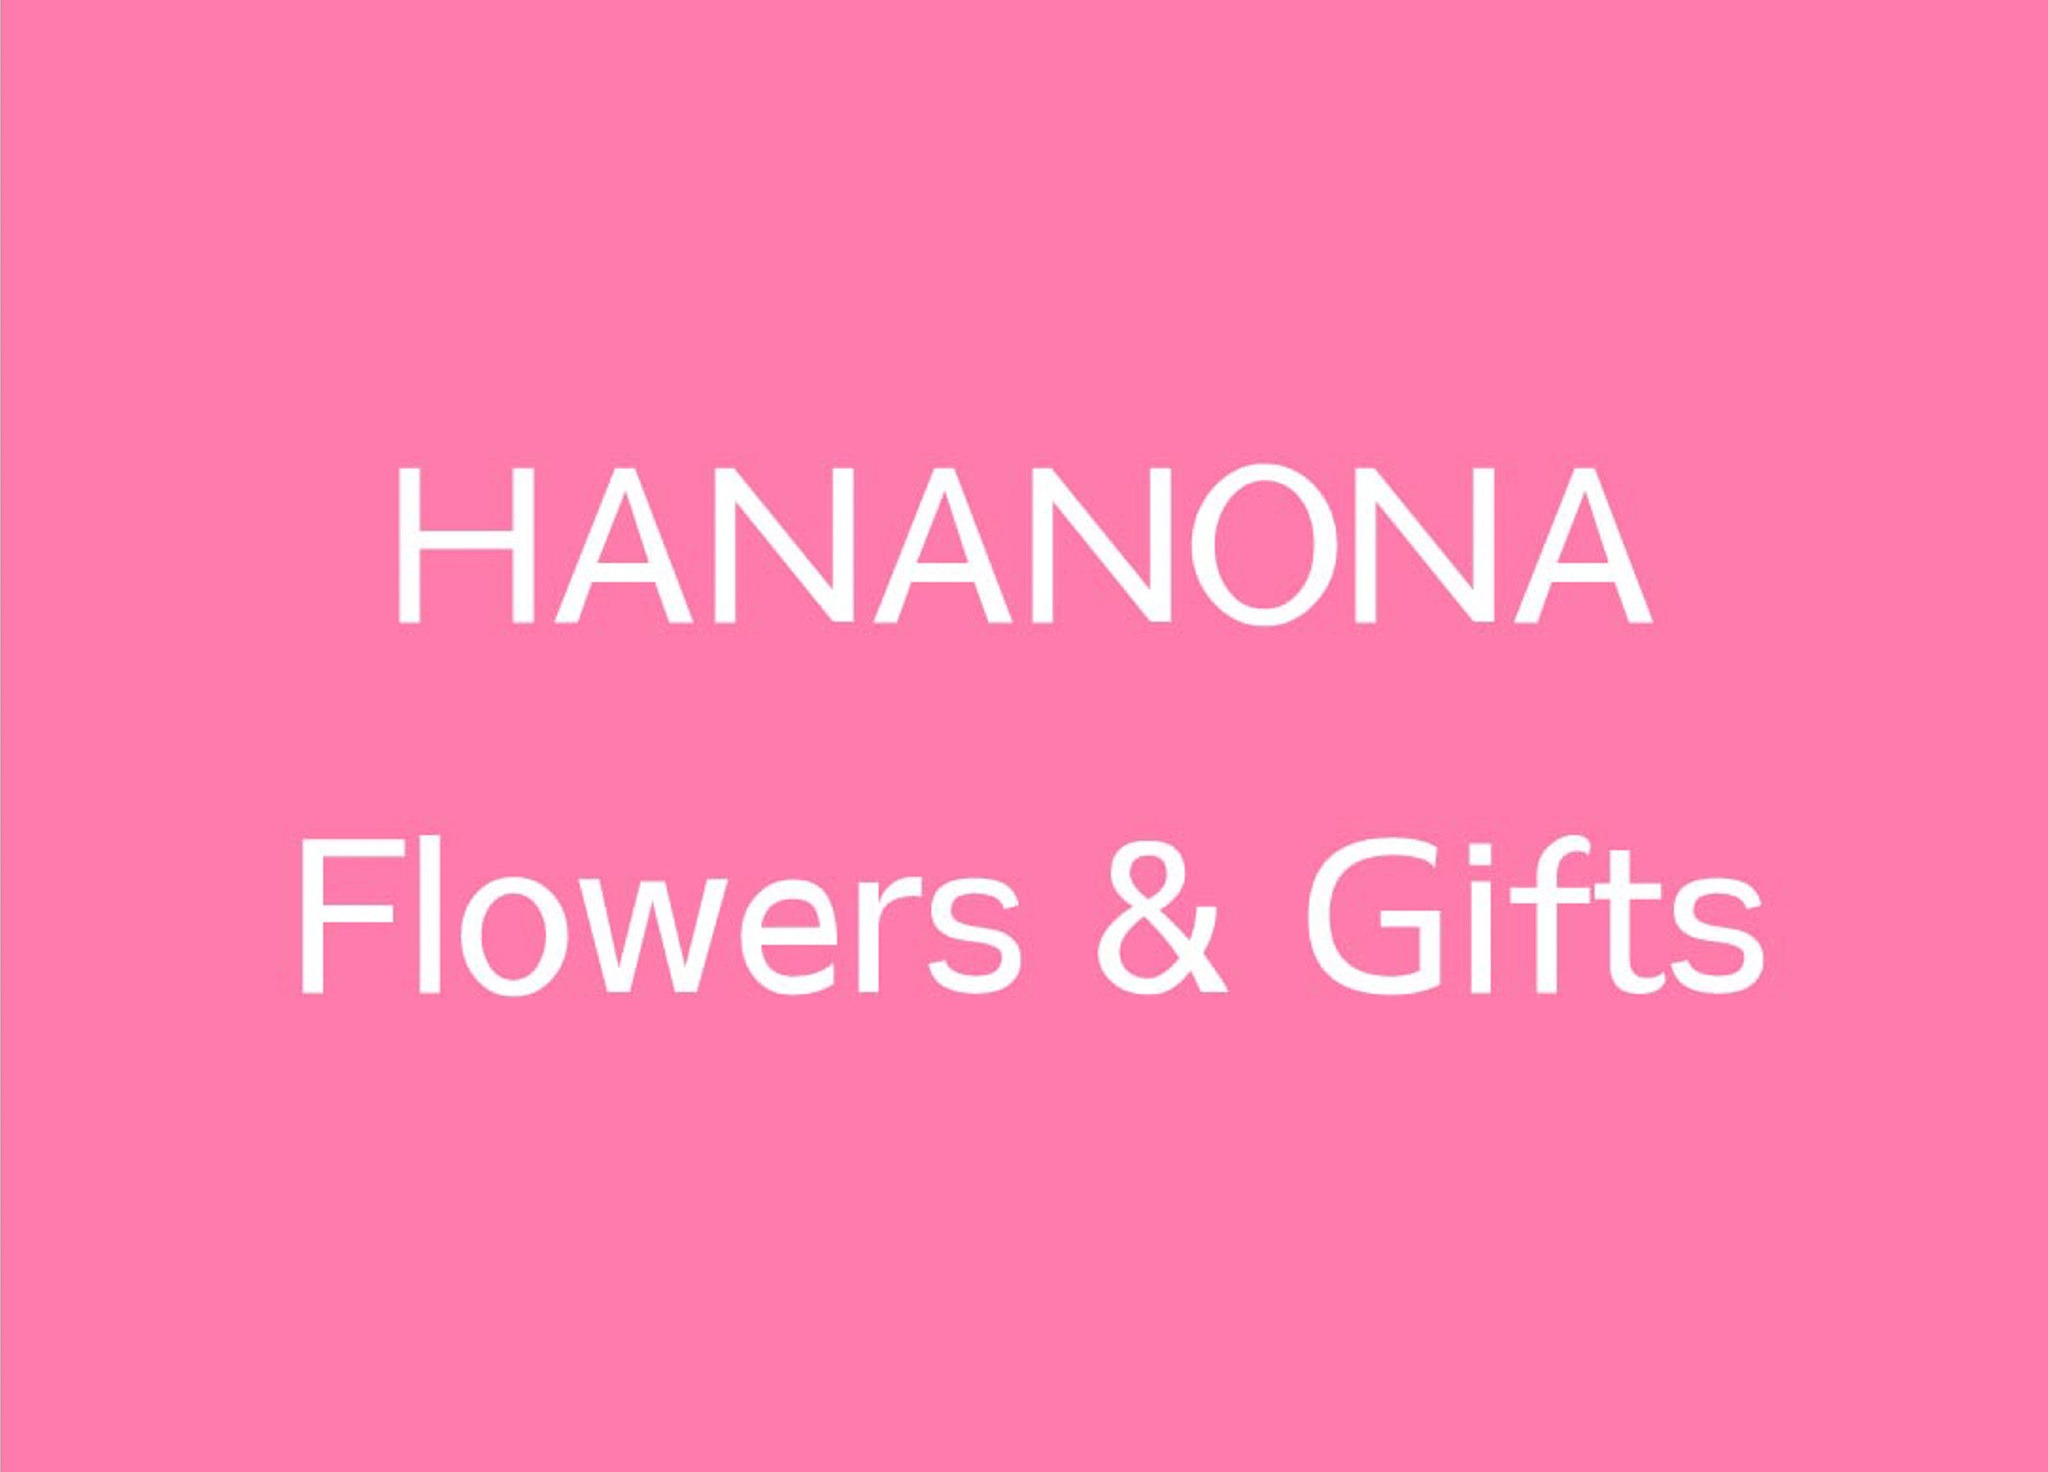 HANANONA flowers & gifts